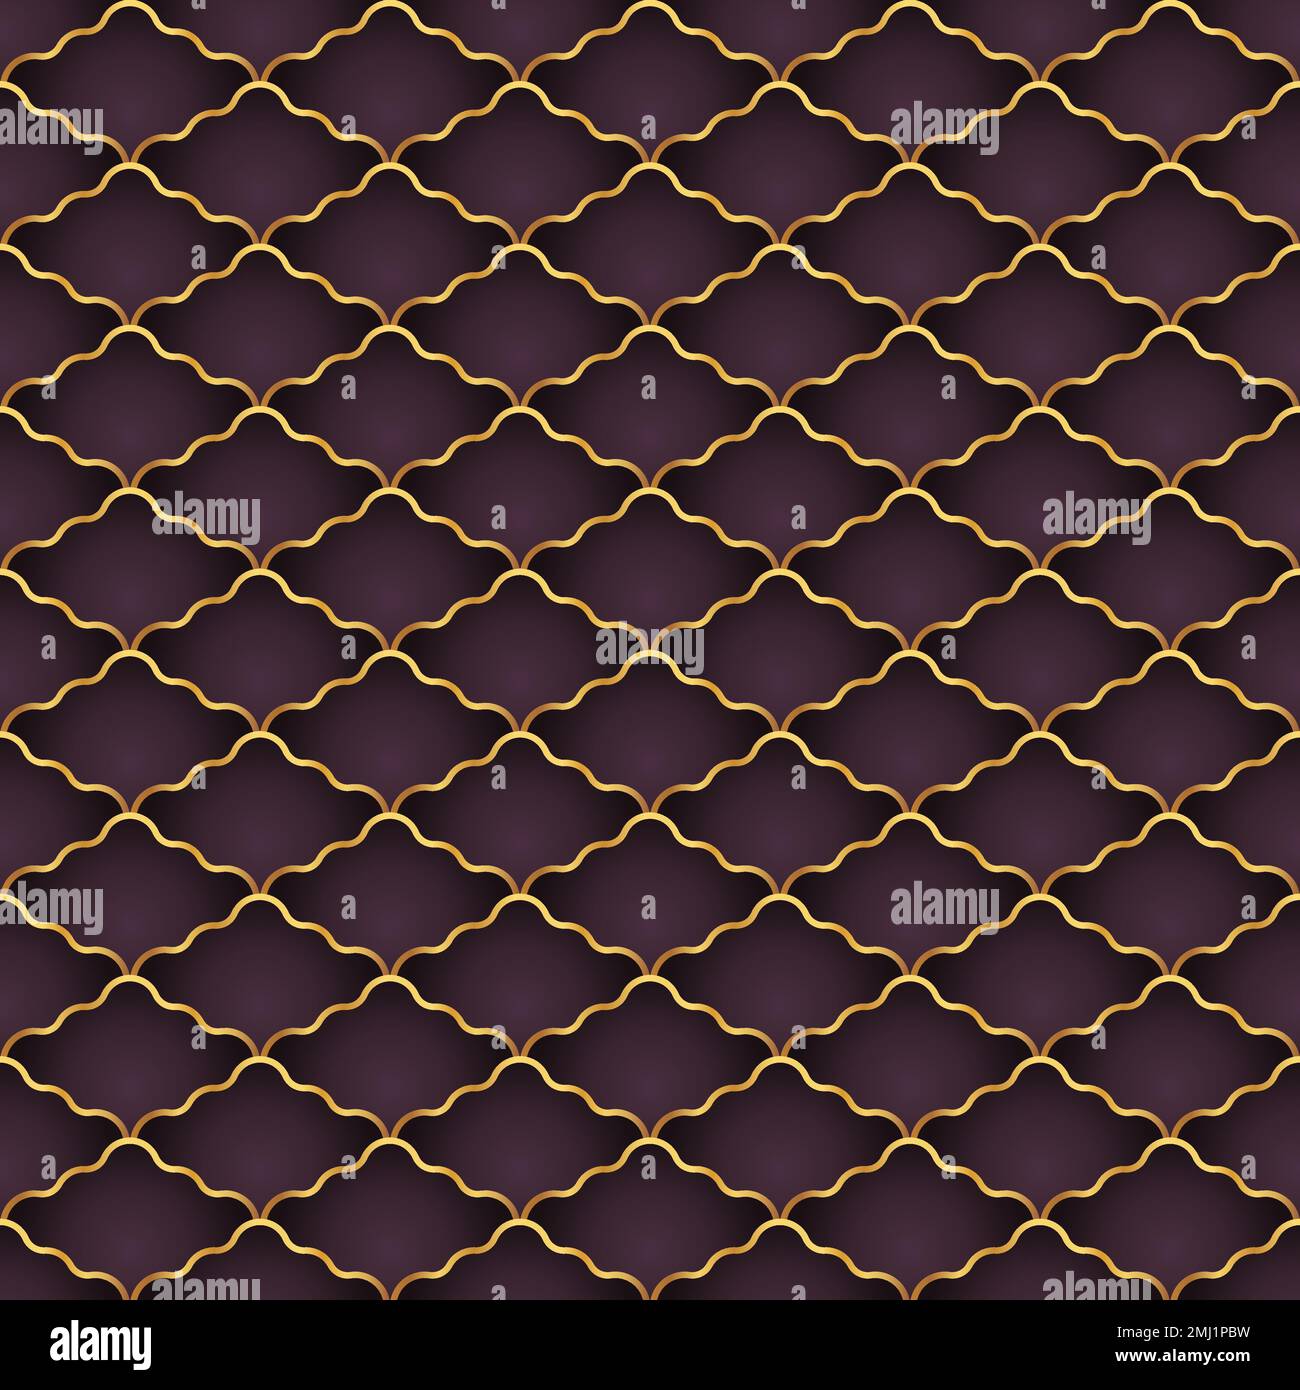 https://c8.alamy.com/comp/2MJ1PBW/traditional-chinese-fish-scale-seamless-pattern-black-golden-asian-sea-wave-luxury-ornament-2MJ1PBW.jpg